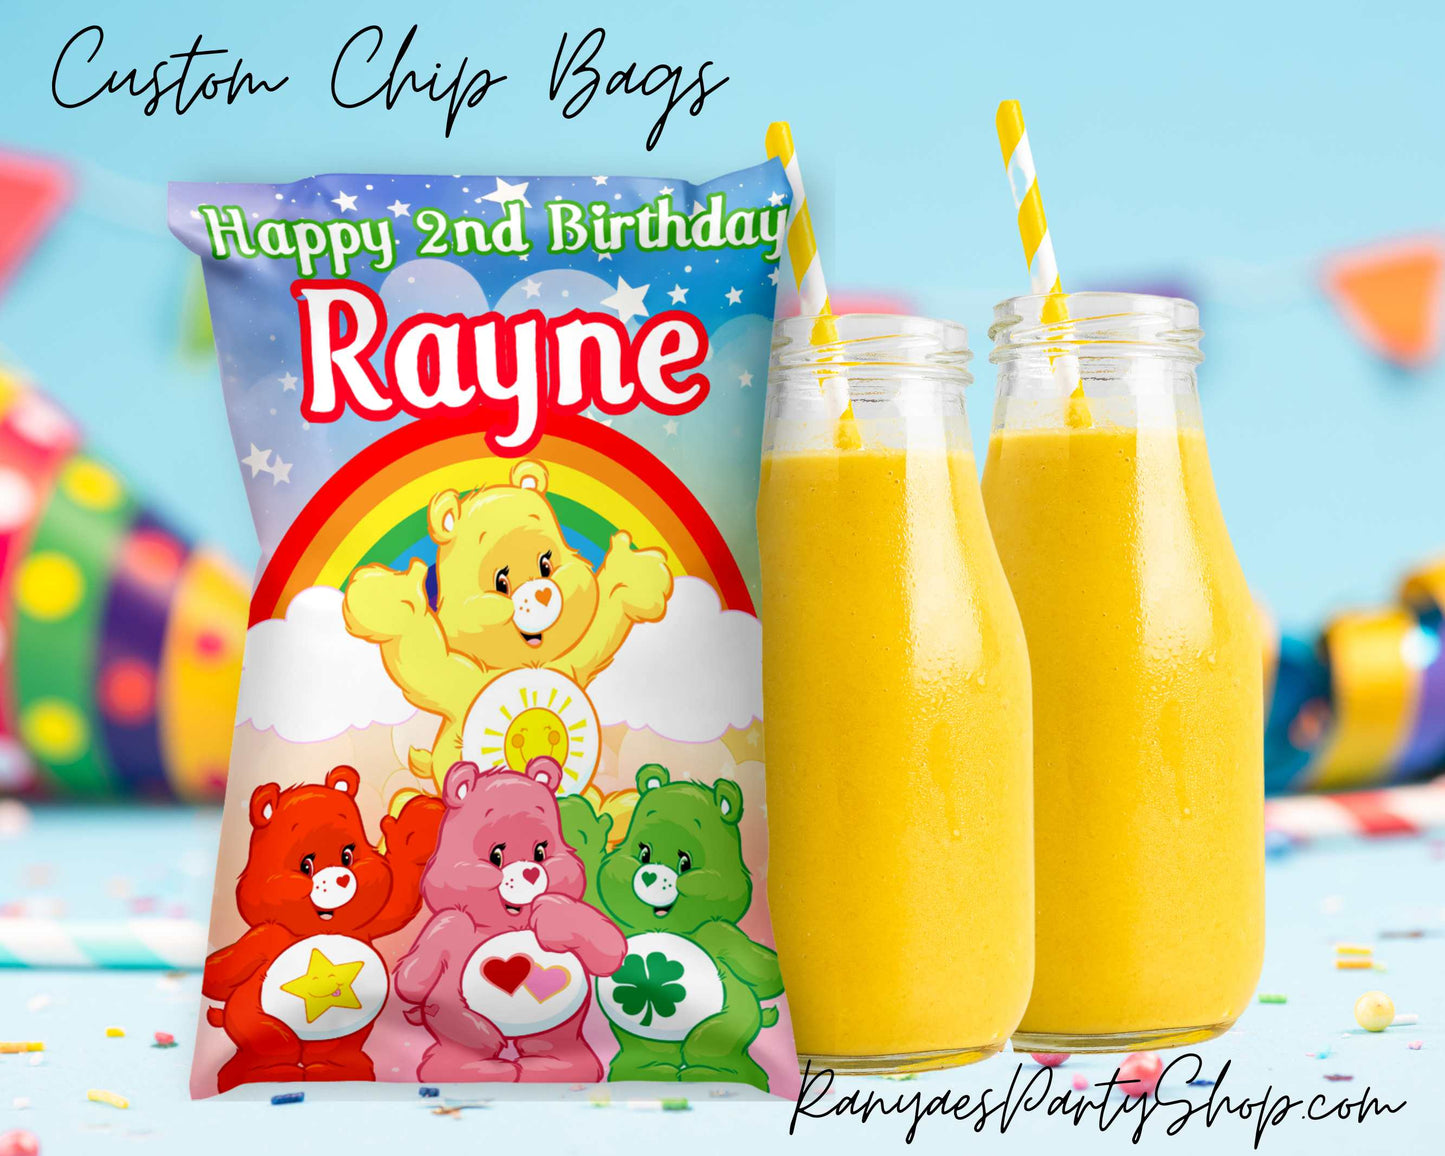 Care Bears Chip Bag Favors | Custom Chip Bags | Custom Birthday Chip Bags | Care Bears Chip Bags